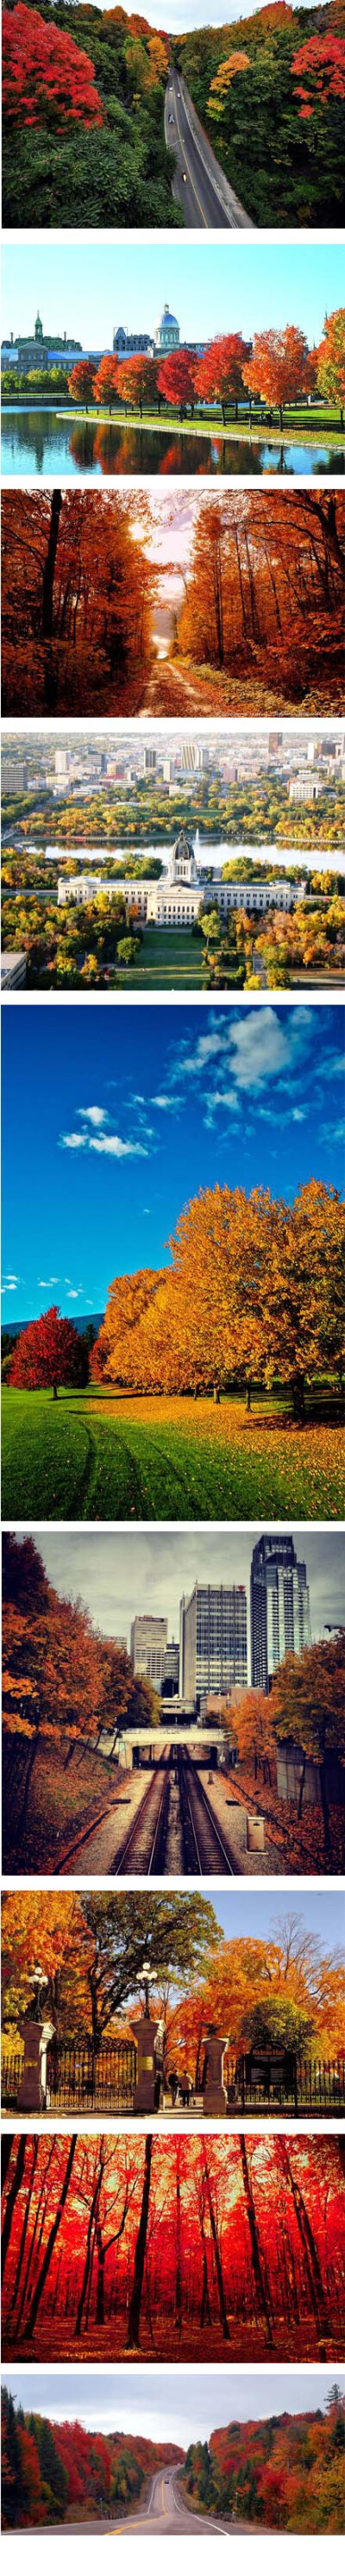 【Y honey旅行时尚手袋分享1】加拿大的秋天；枫叶红到让人感动